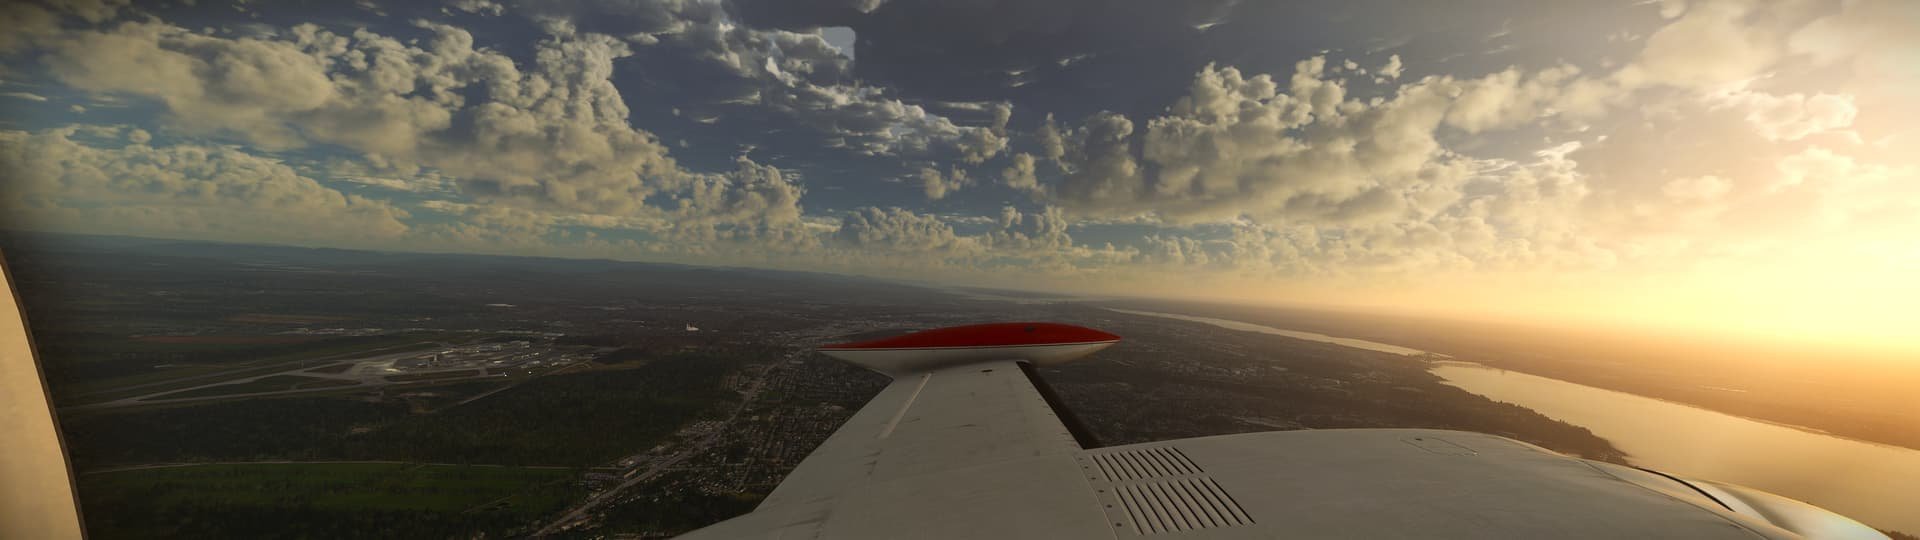 http://image.noelshack.com/fichiers/2022/51/4/1671690422-microsoft-flight-simulator-screenshot-2022-12-21-22-08-39-70.jpg